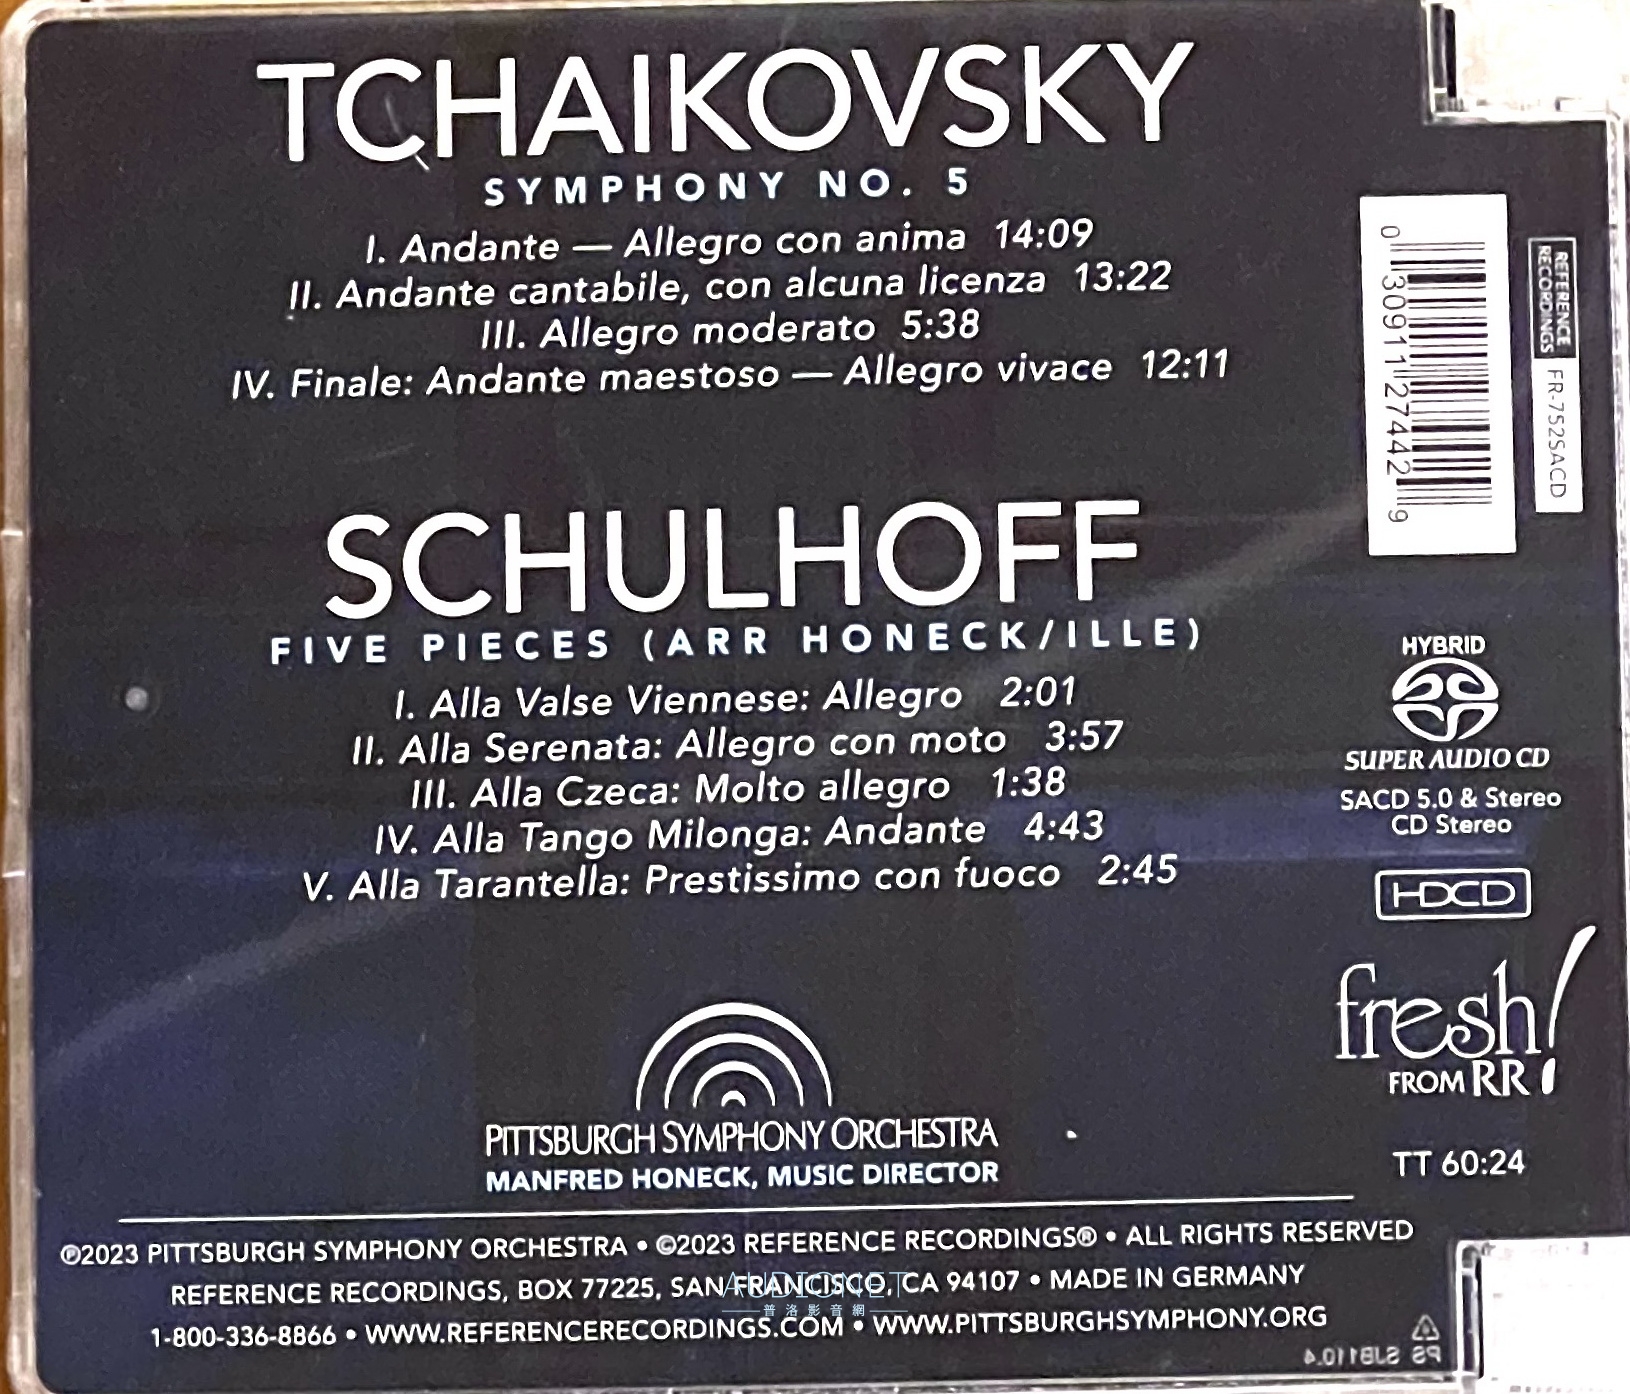 Manfred Honeck指揮匹茲堡交響樂團柴可夫斯基第五號交響曲